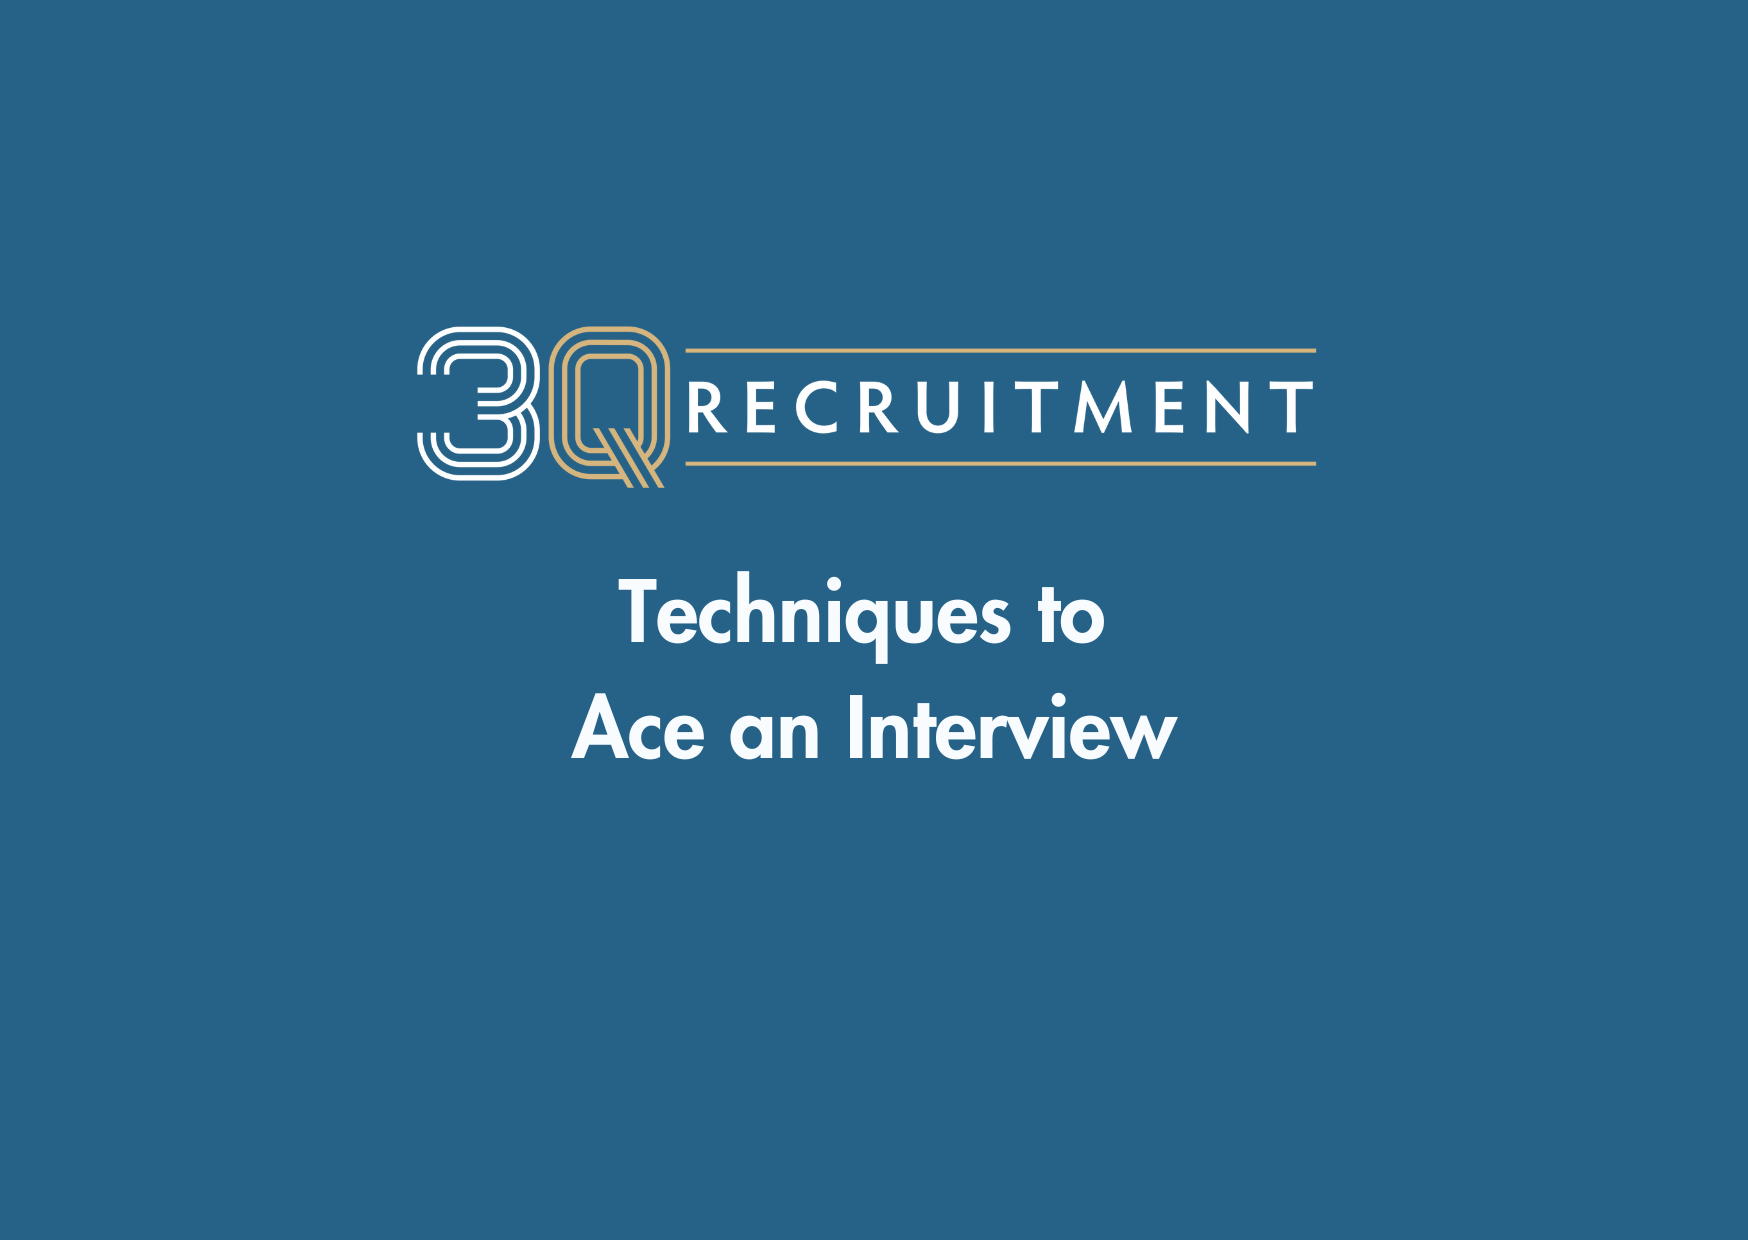 3Q Recruitment Techniques to Ace an Interview